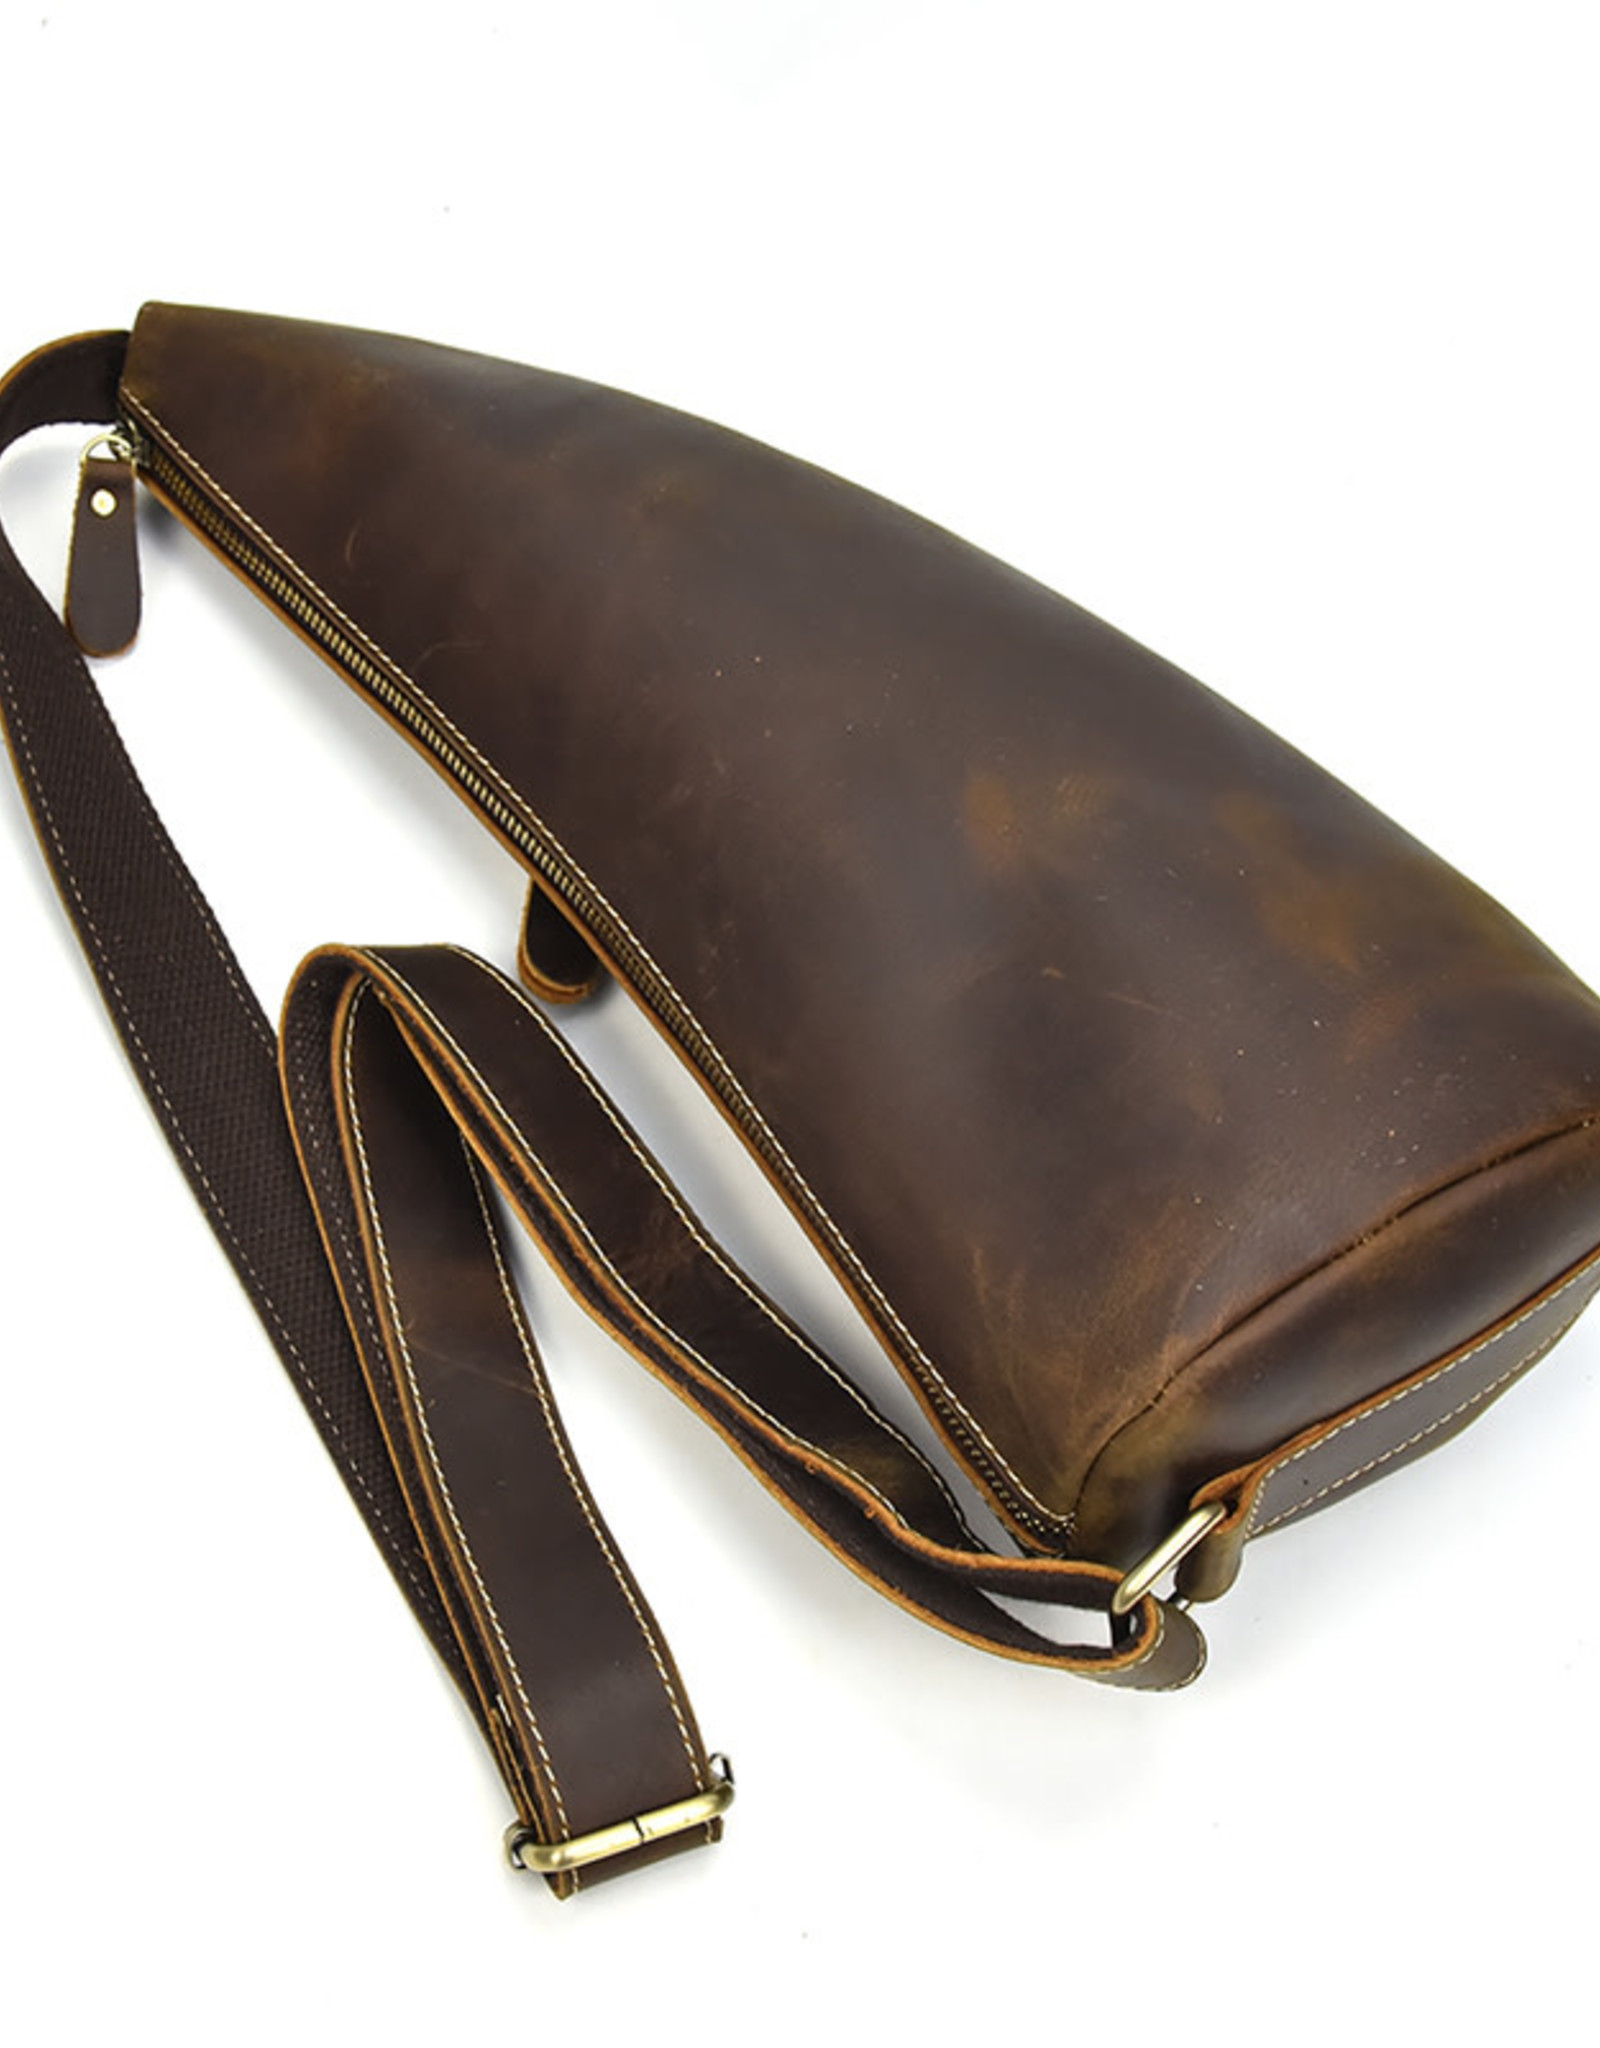 Matthew Chest Strap Bag Genuine Leather